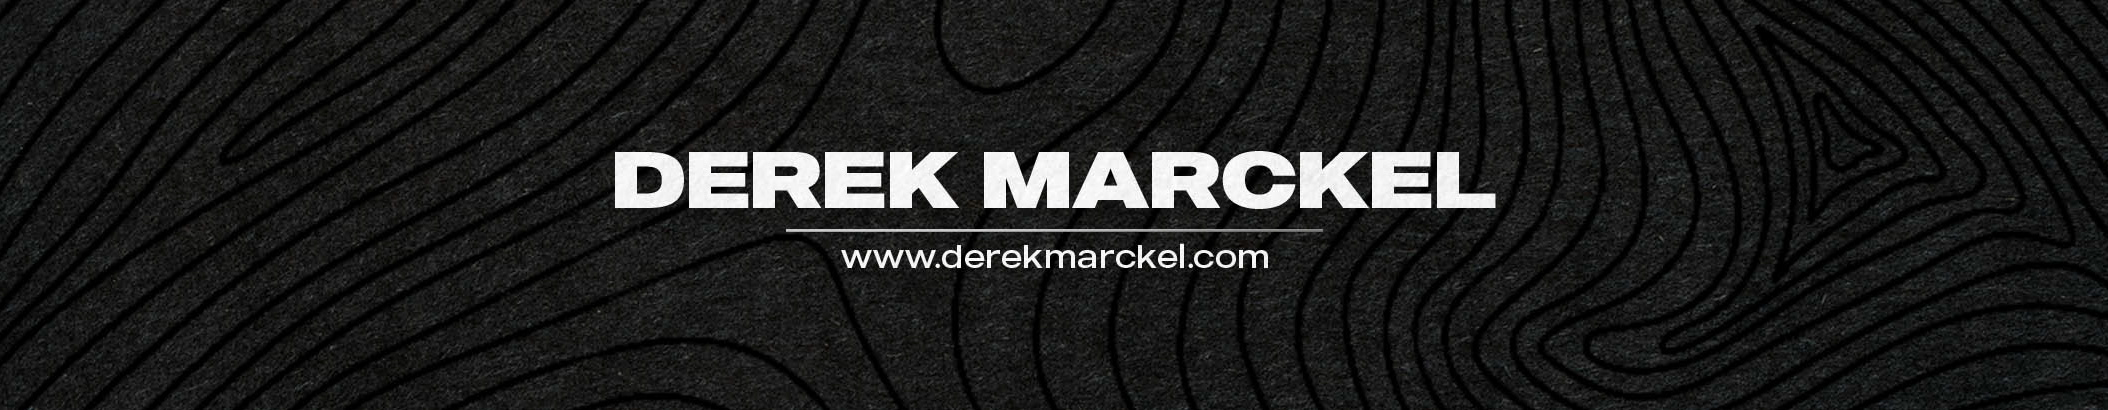 Derek Marckel's profile banner